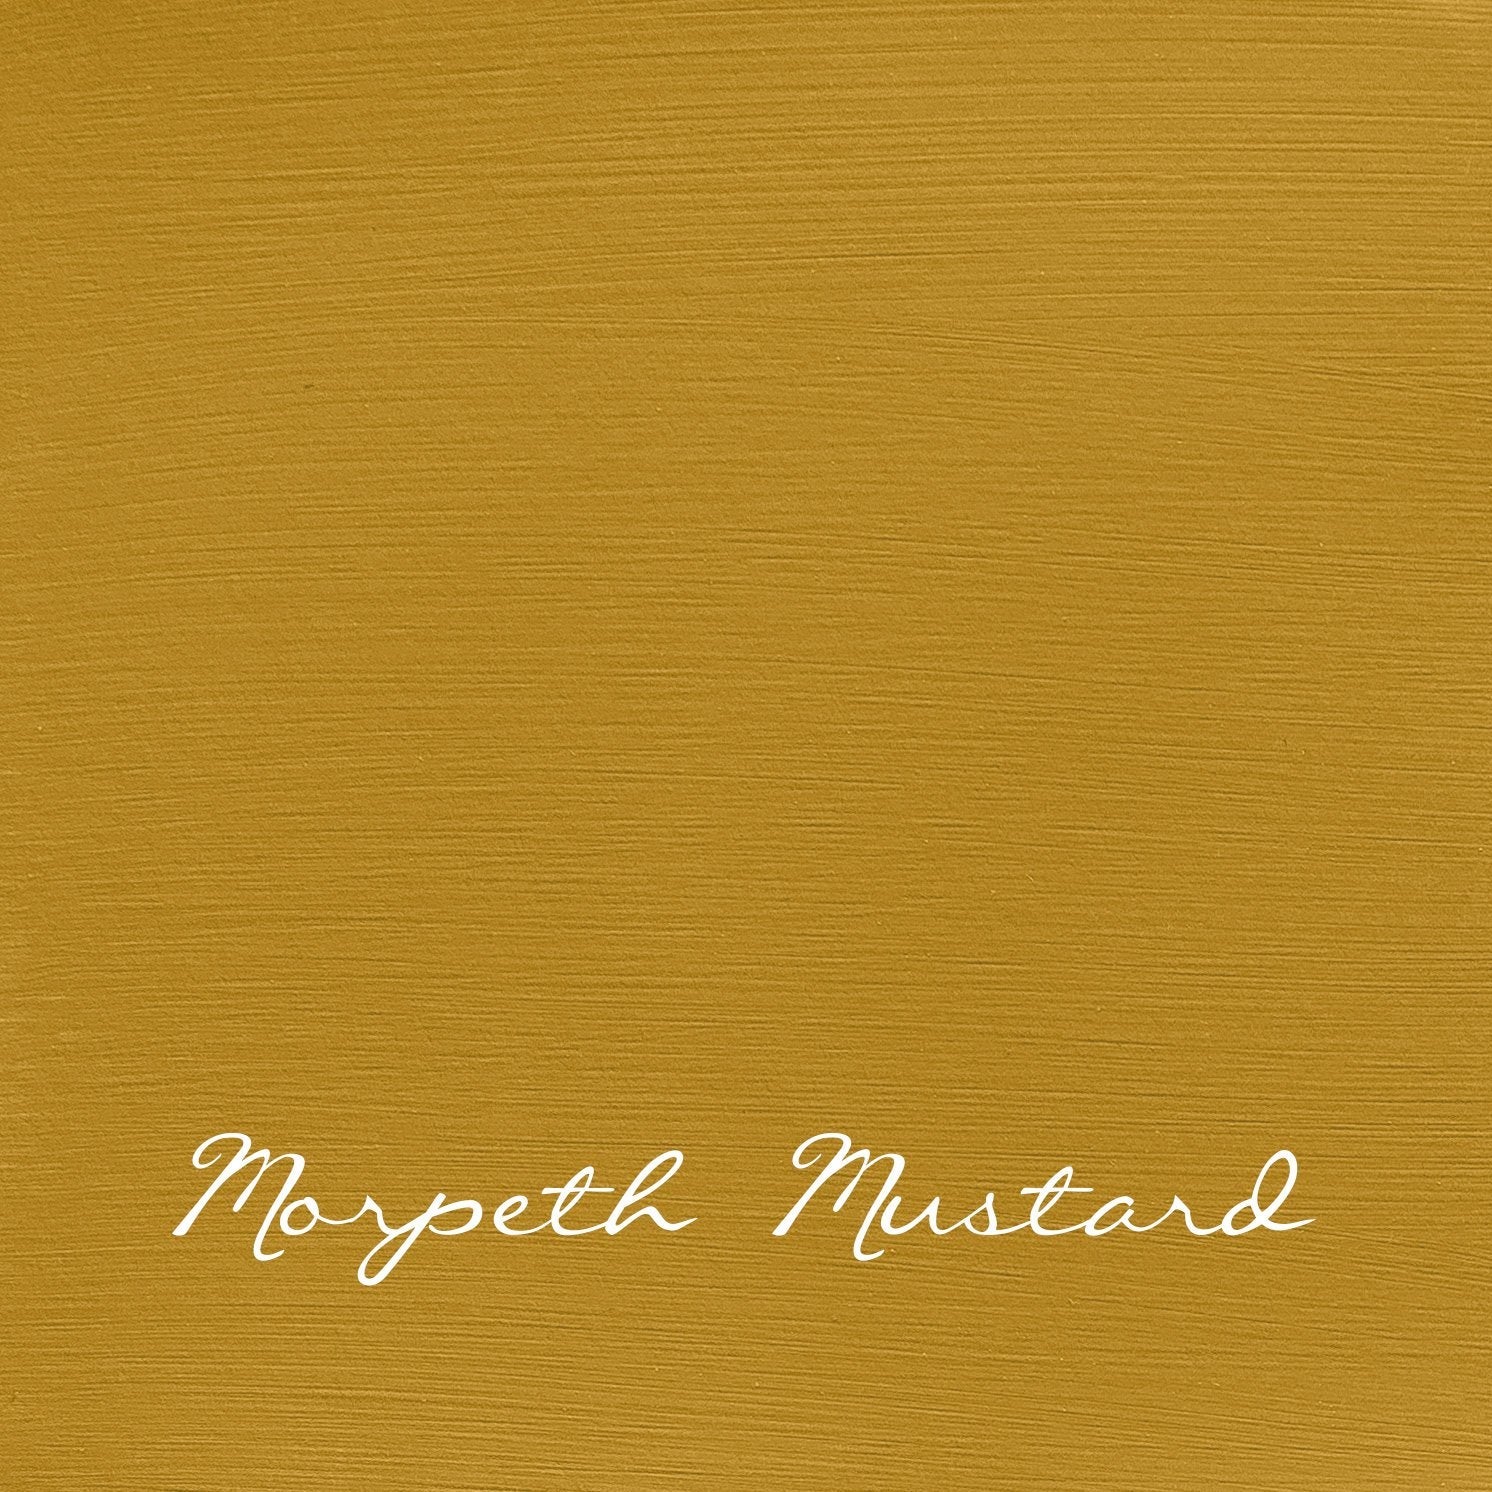 Vintage Morpeth Mustard